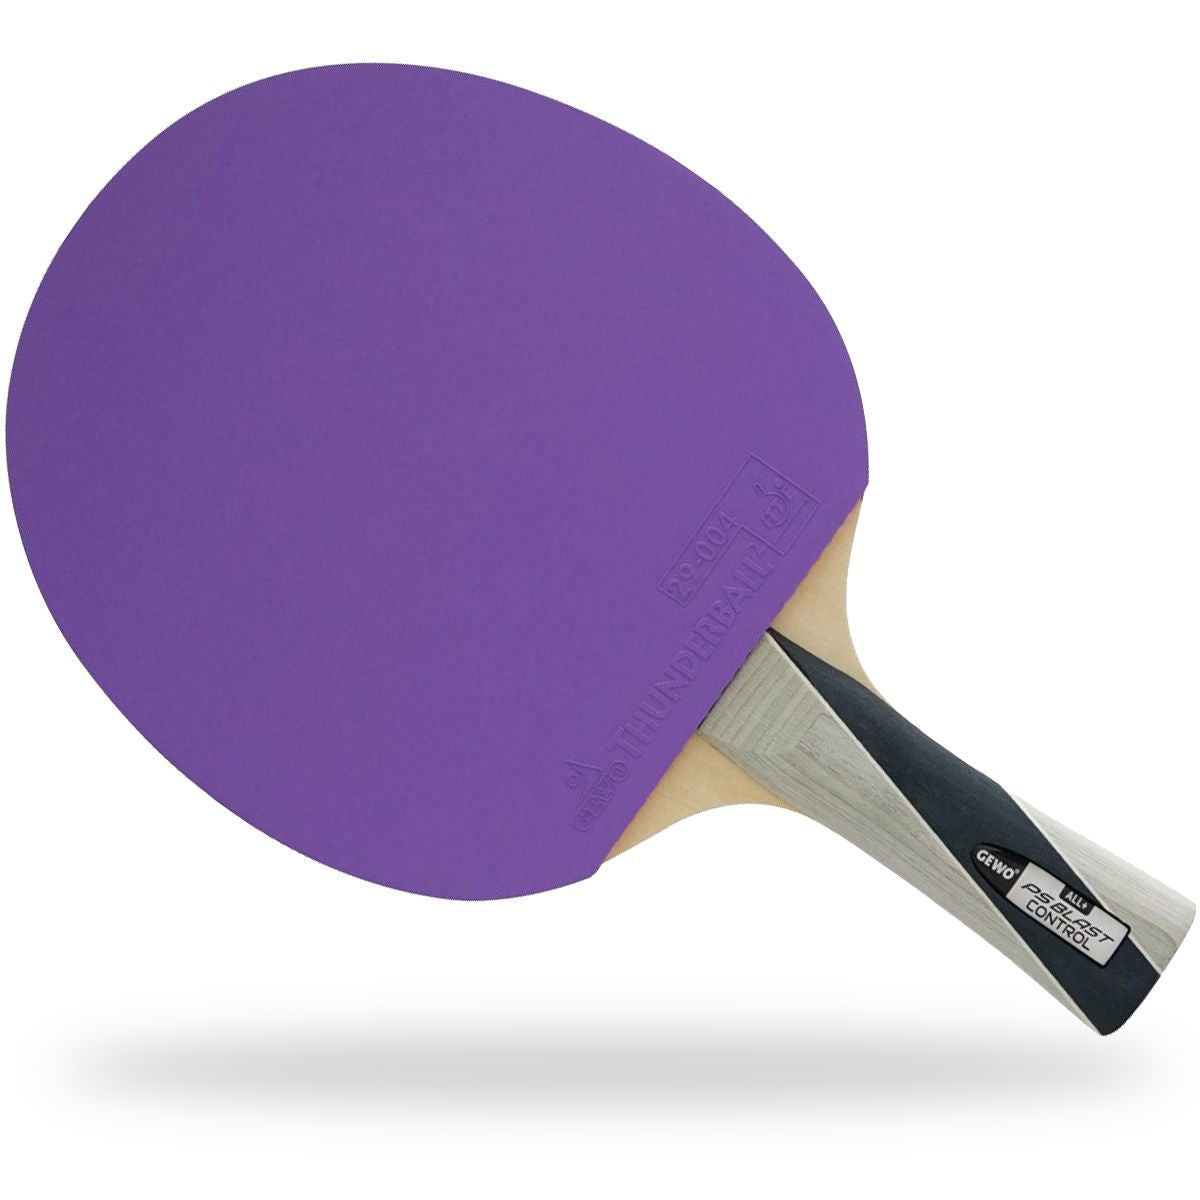 GEWO Bat PS Blast Control flared - Offensive Minus Table Tennis Racket